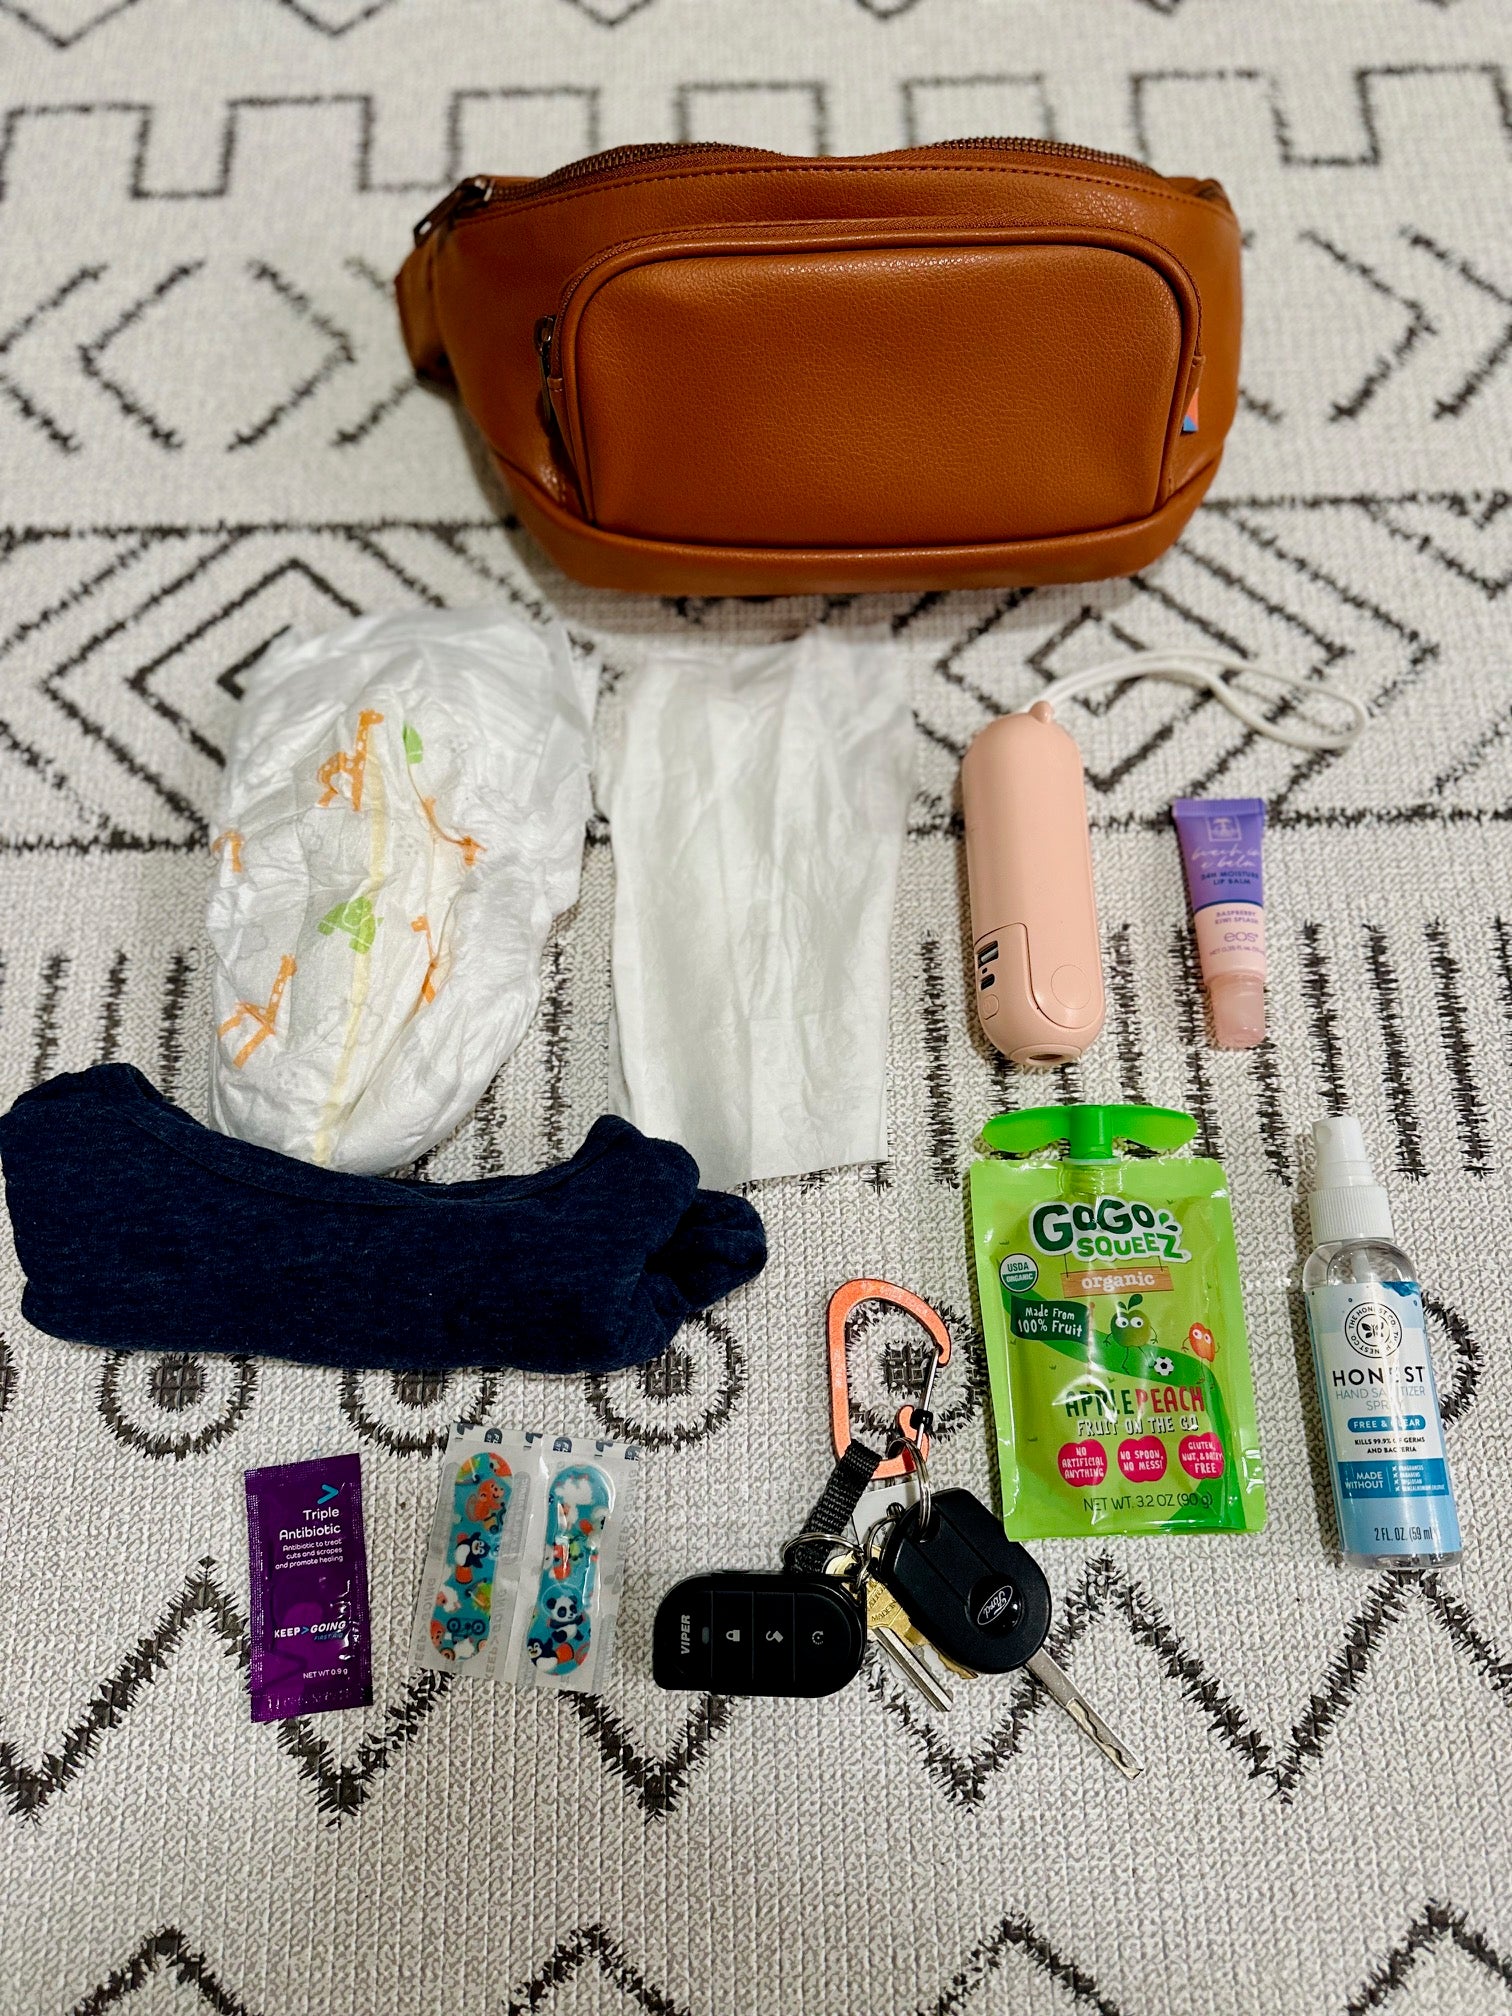 Kibou bag with baby supplies